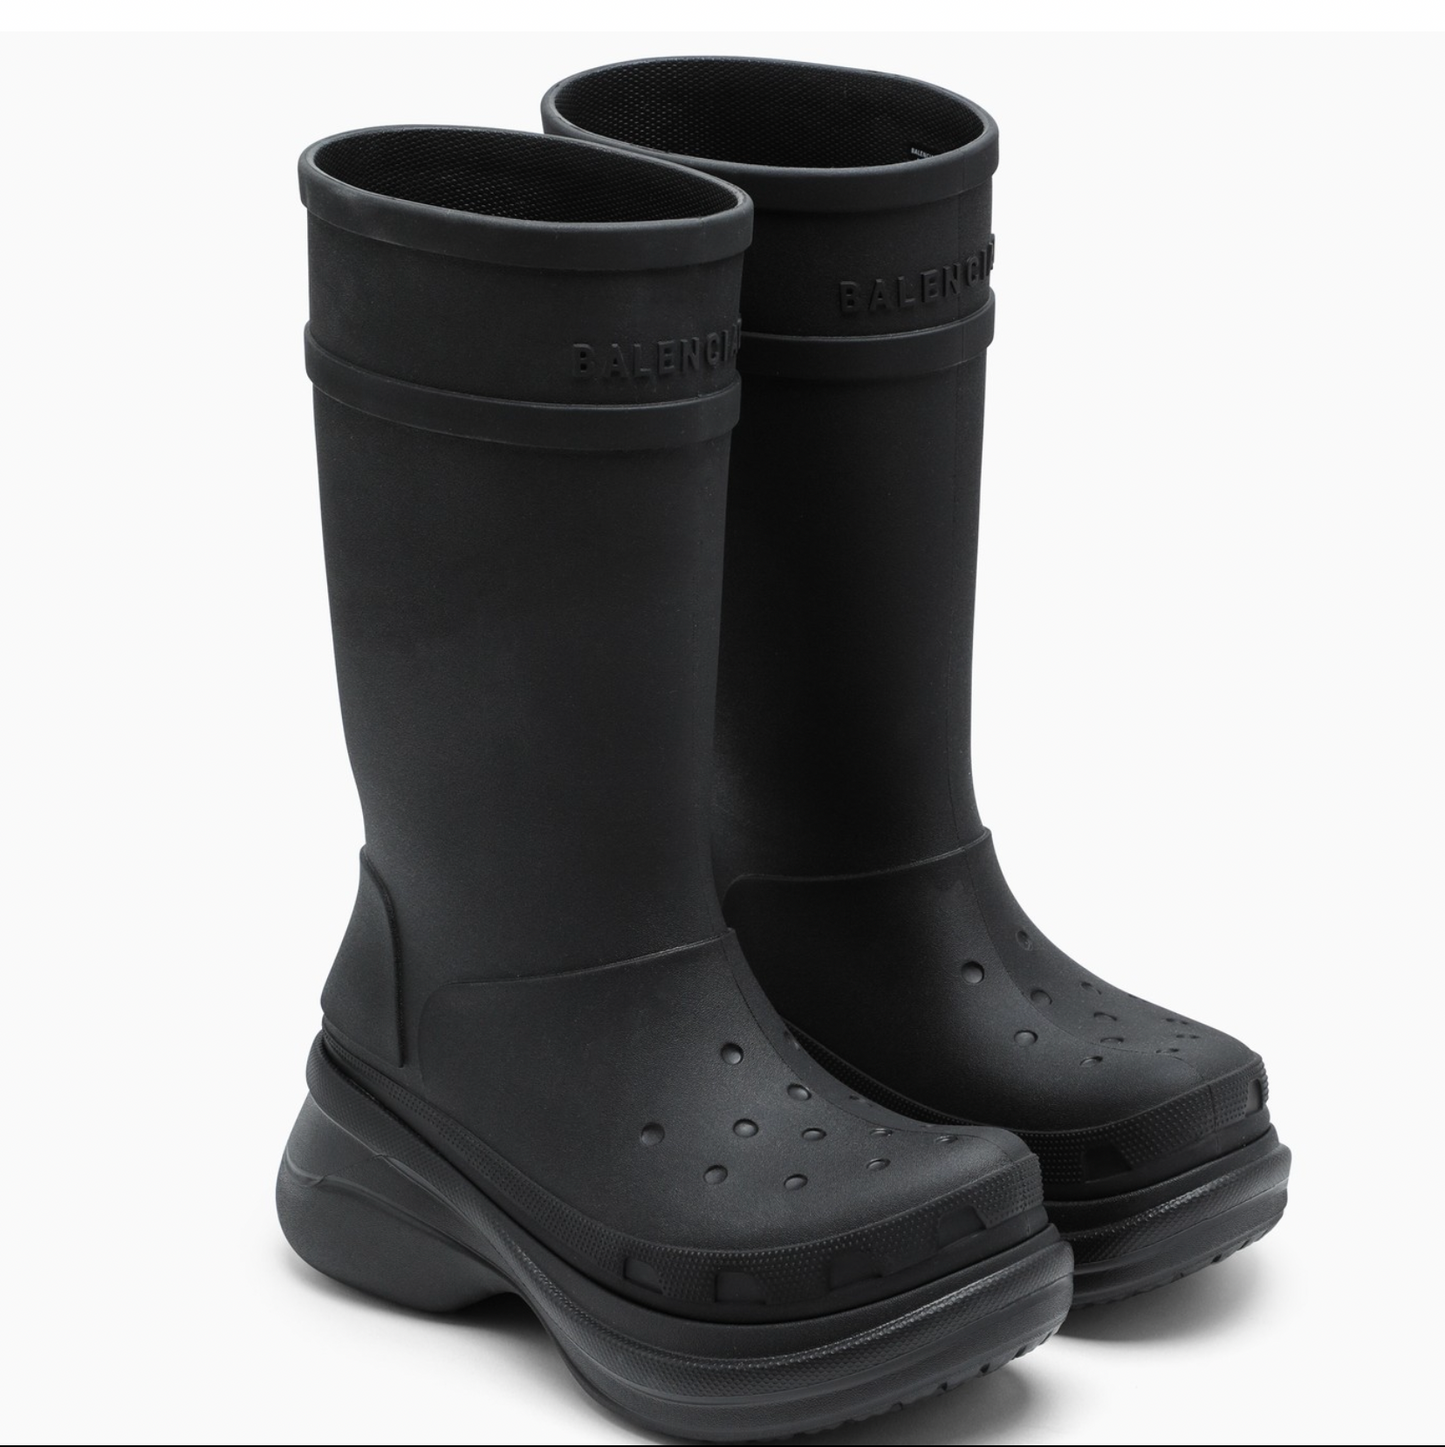 Balenciaga x Crocs Boot in black | Archive Designer Collections ...